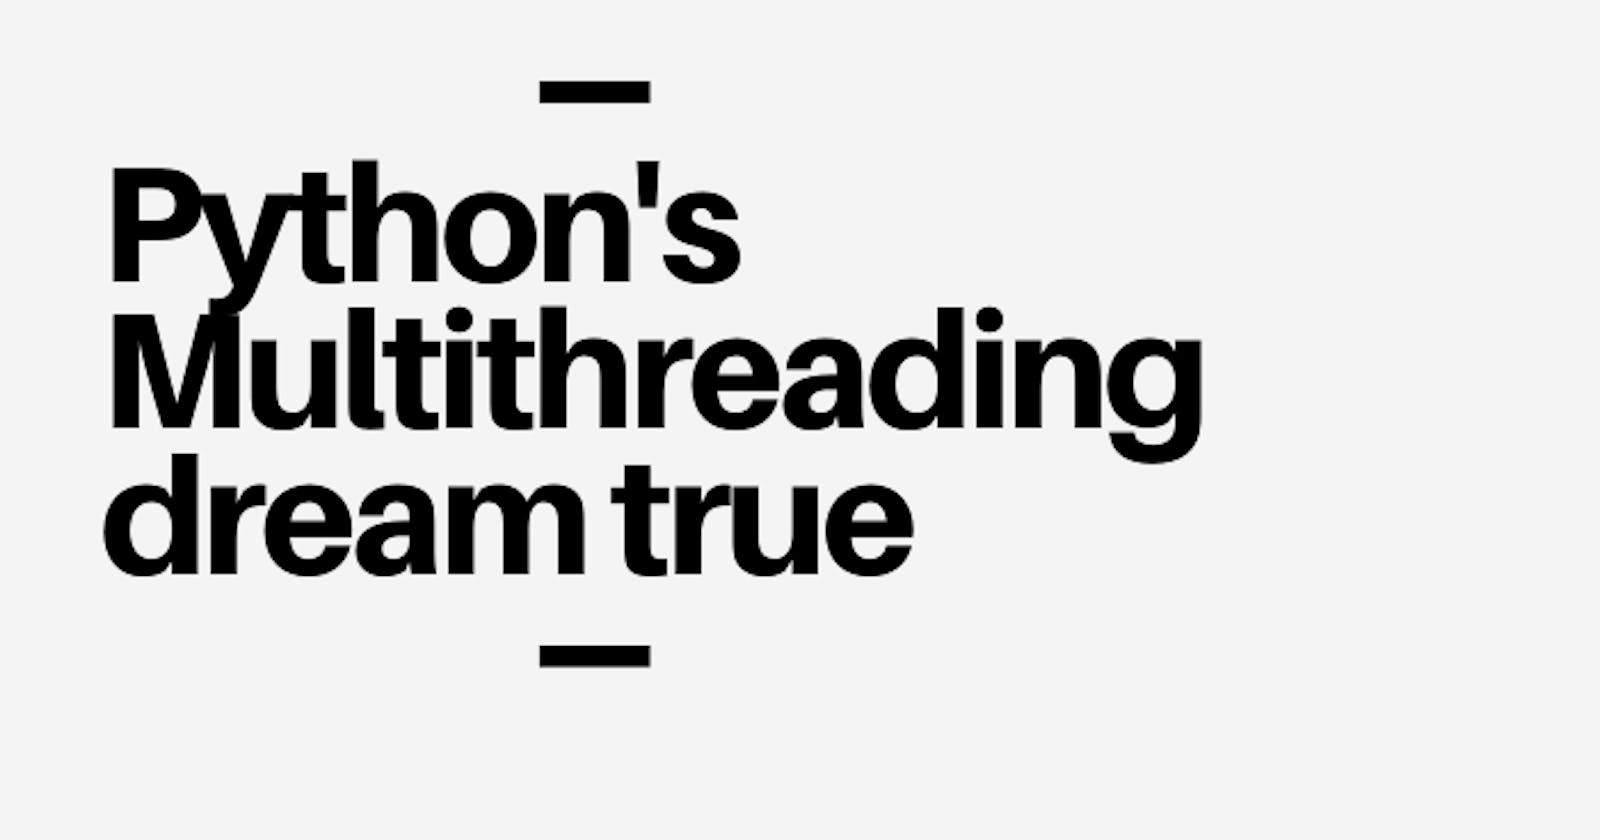 Python's Multithreading dream true